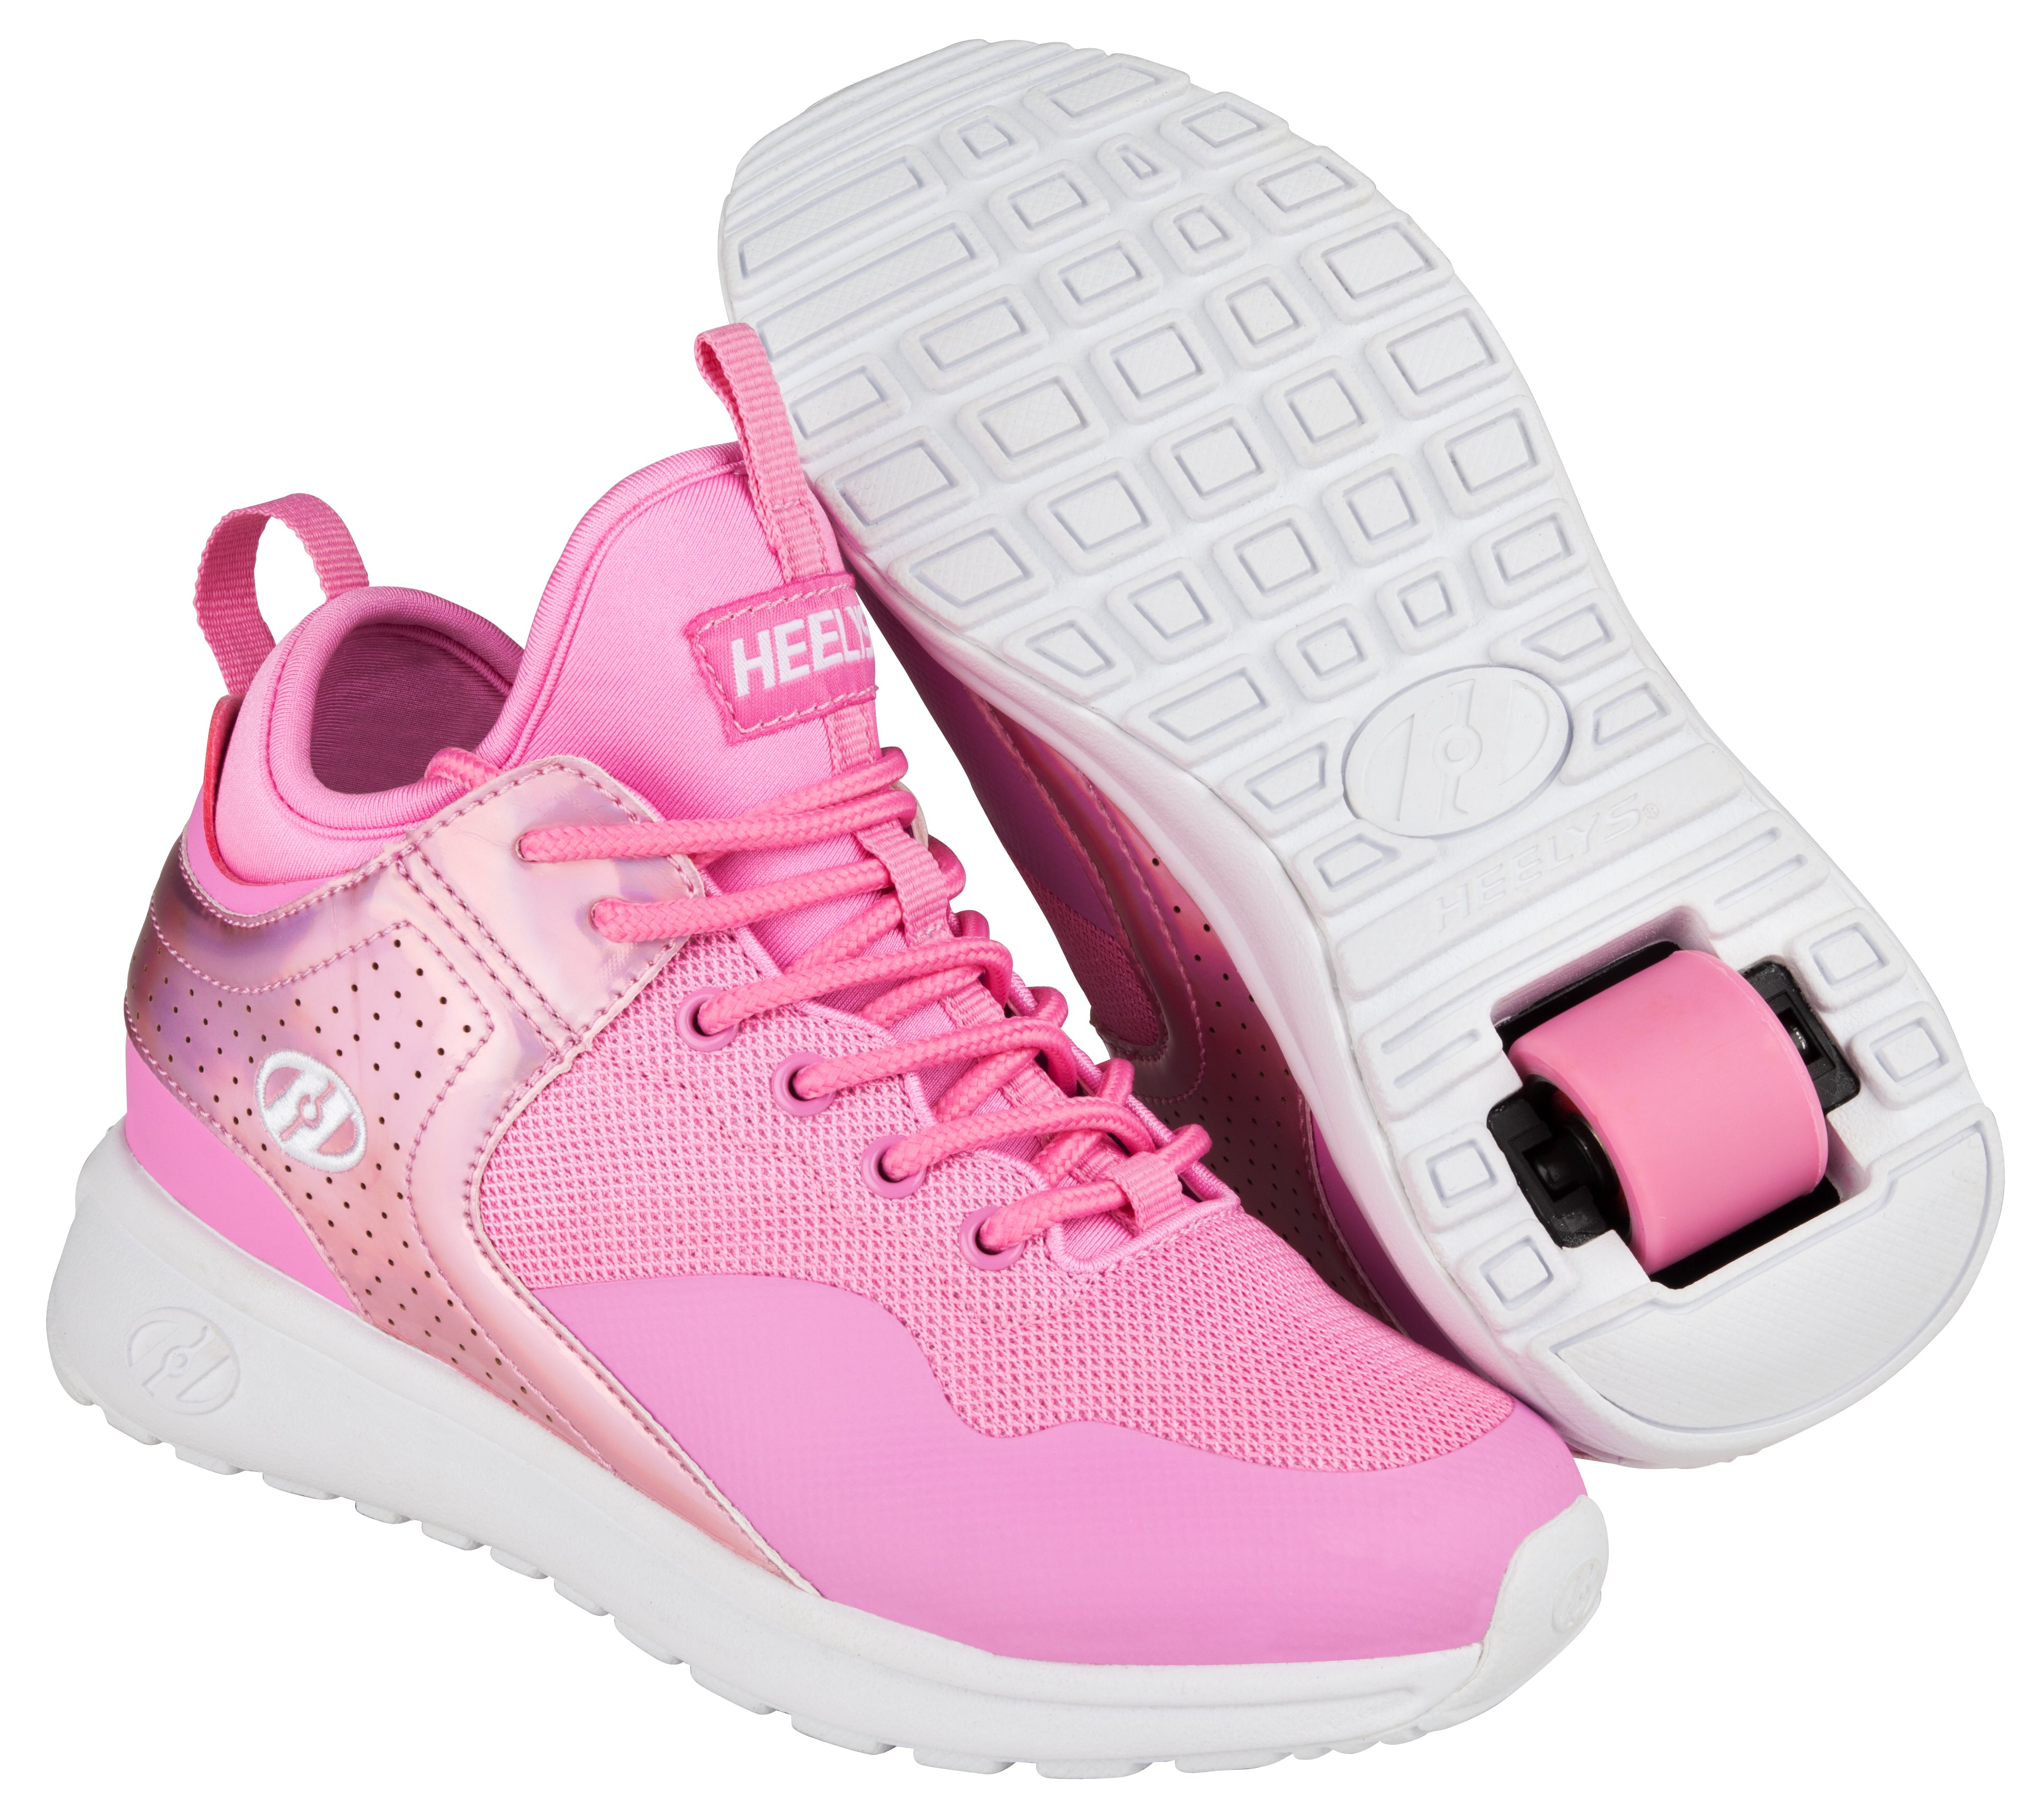 Heelys Piper Shoes - Light Pink / Pink 